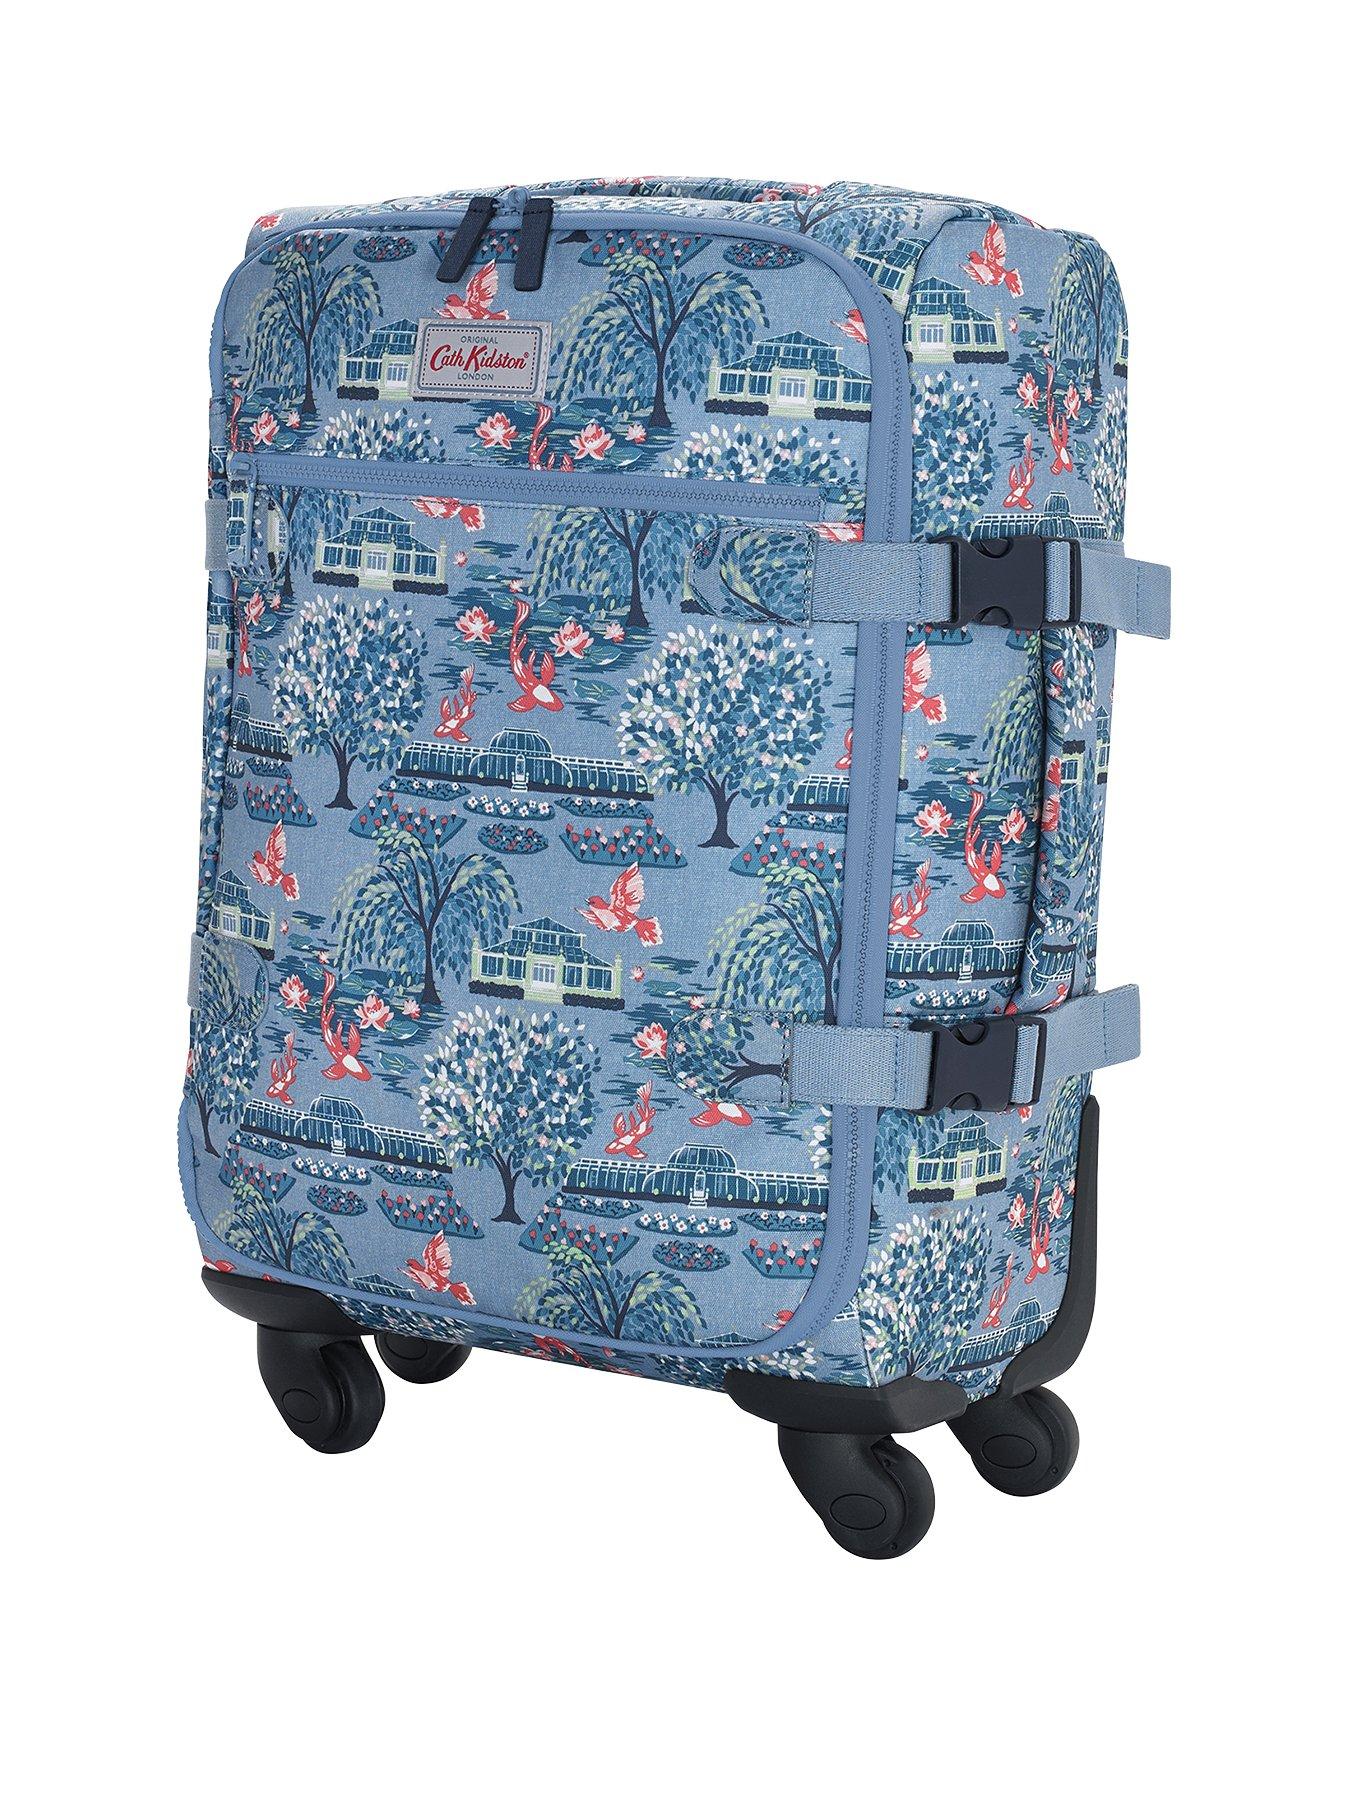 cath kidston suitcase